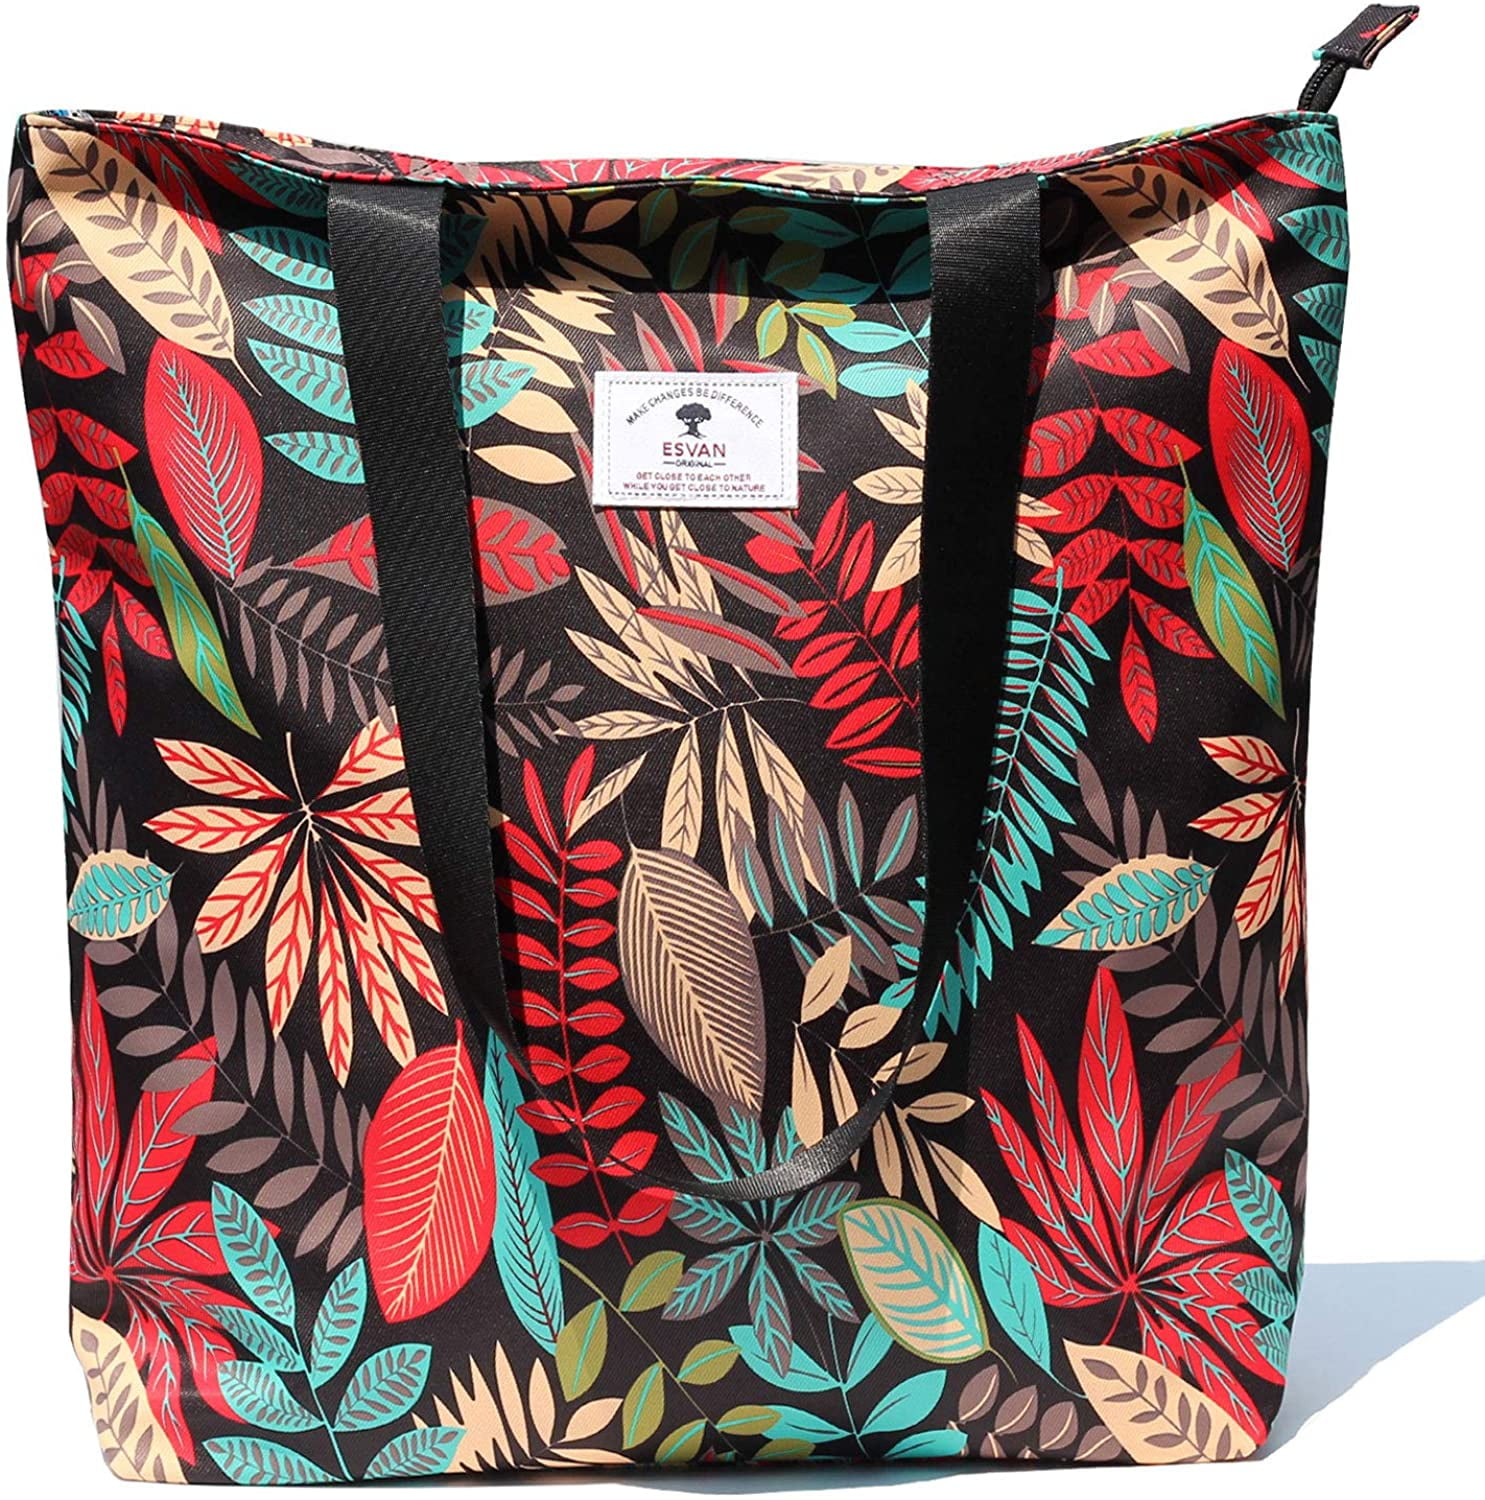 ESVAN Original Floral Tote Bag Shoulder Bag for Gym Hiking Picnic Travel Beach